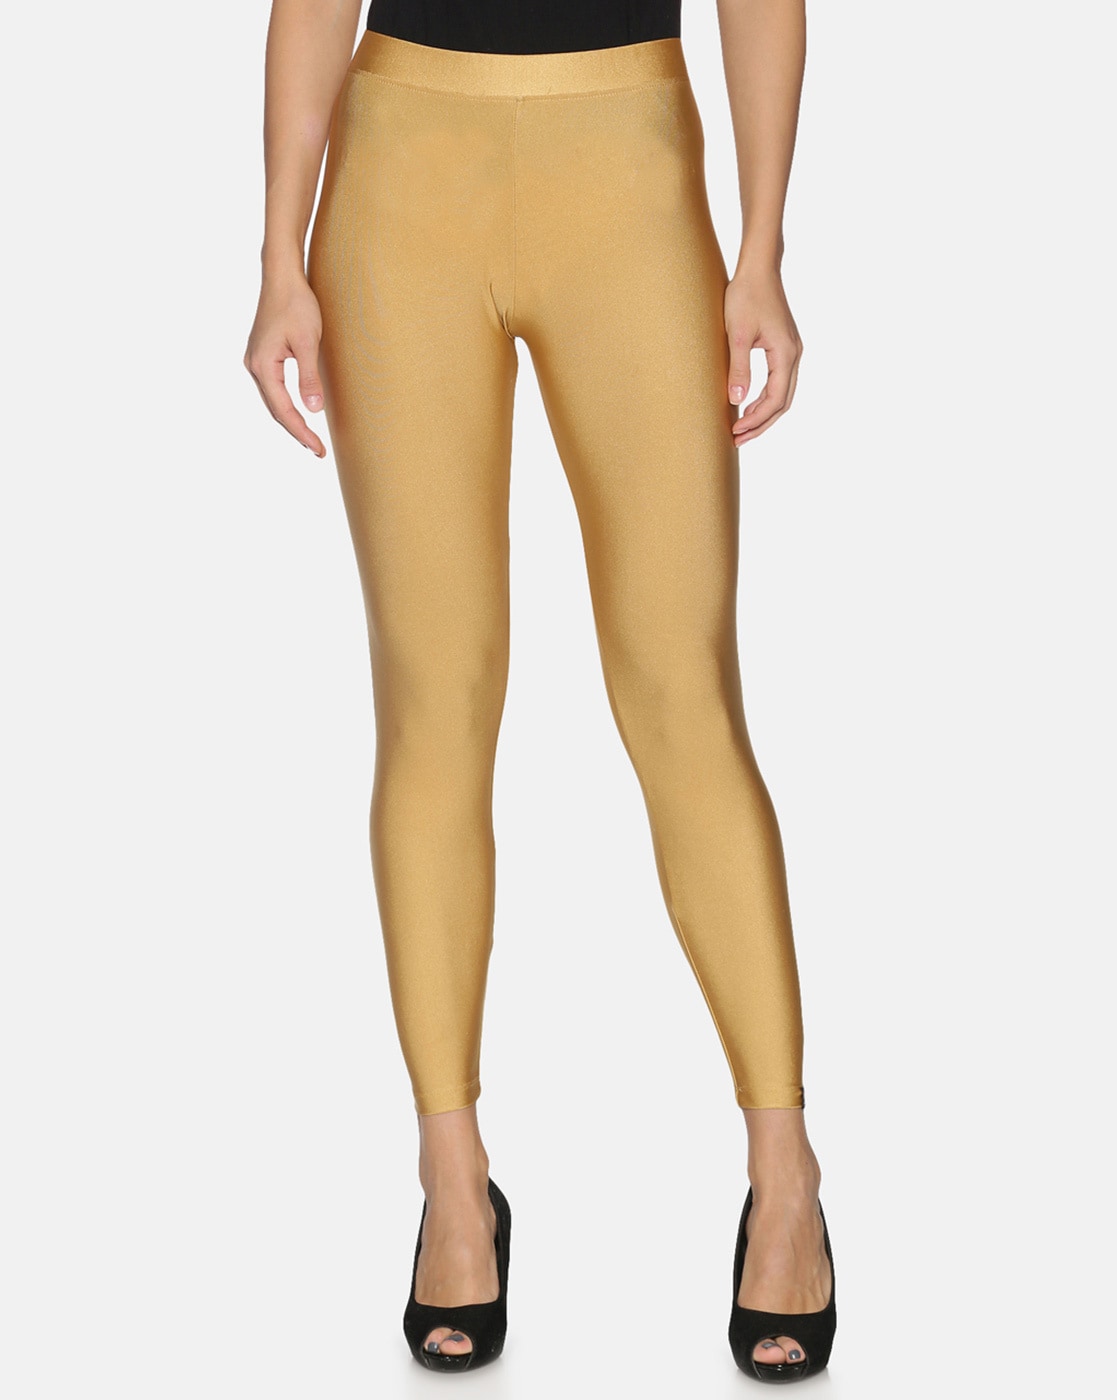 Update more than 144 golden colour leggings best